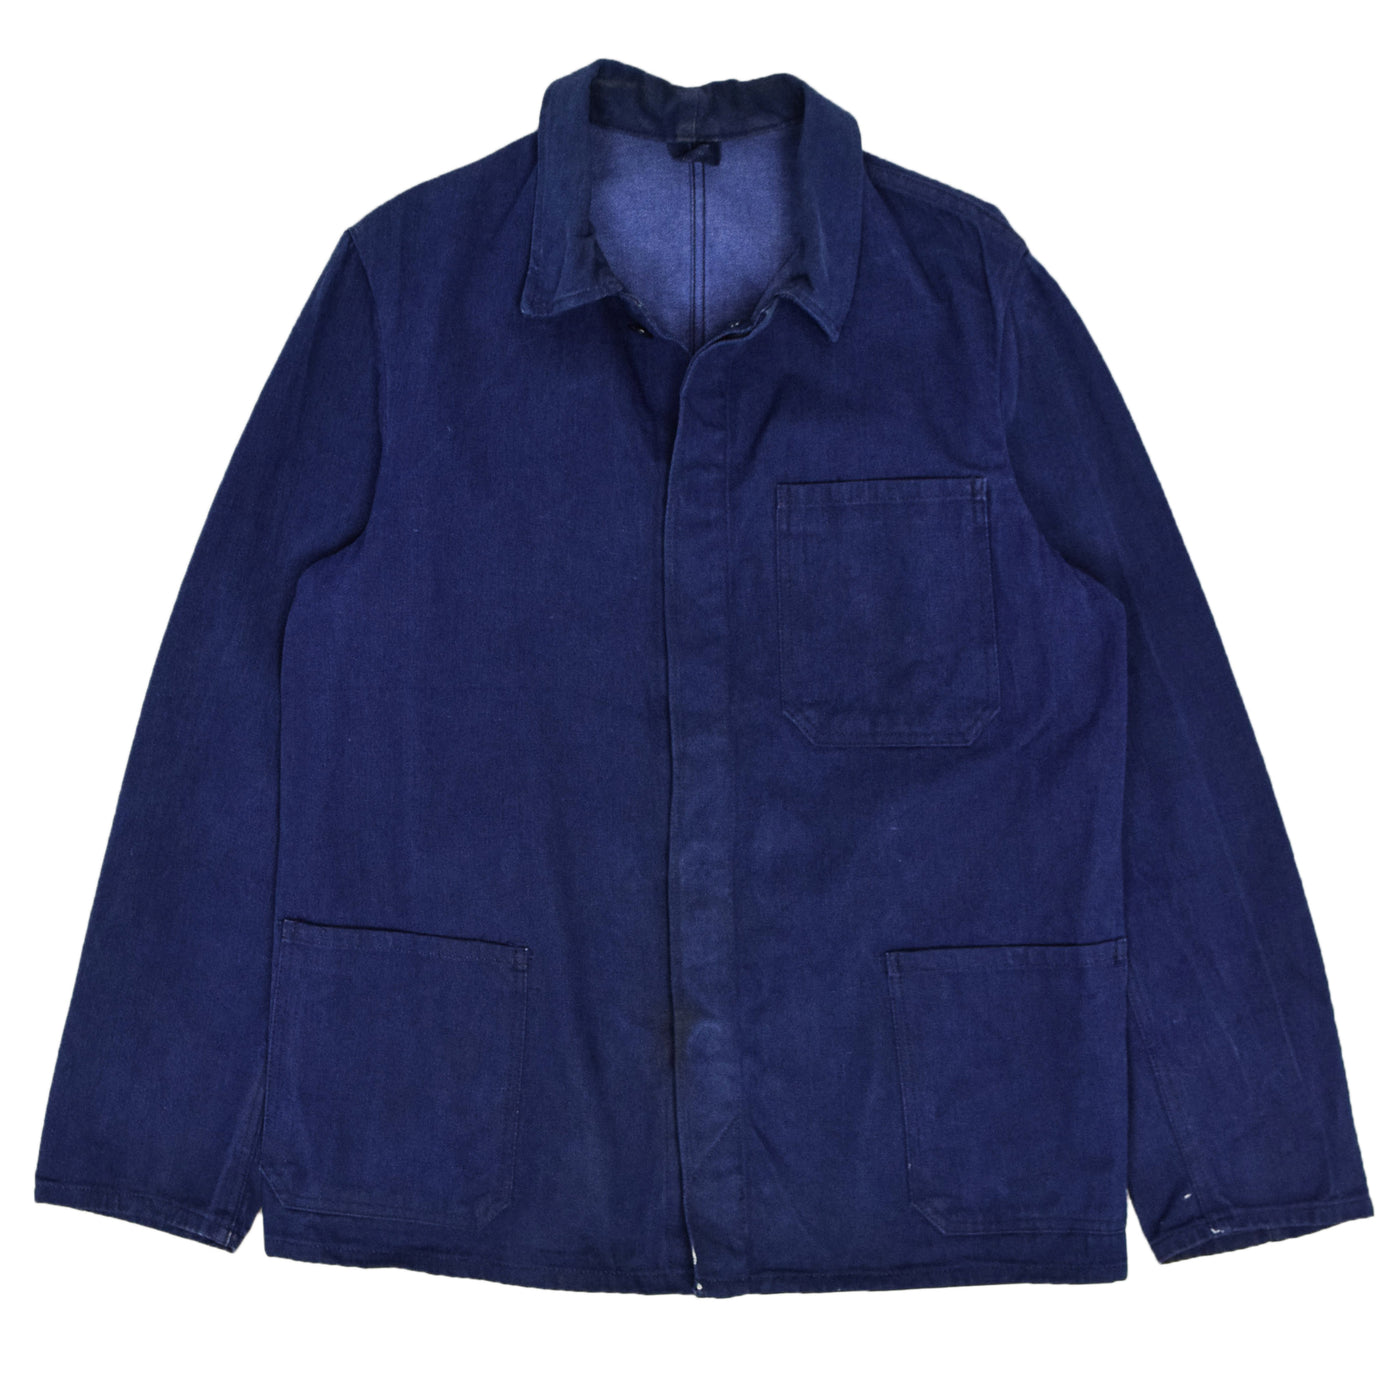 Vintage Indigo Blue French Style Denim Cotton Worker Chore Jacket M front